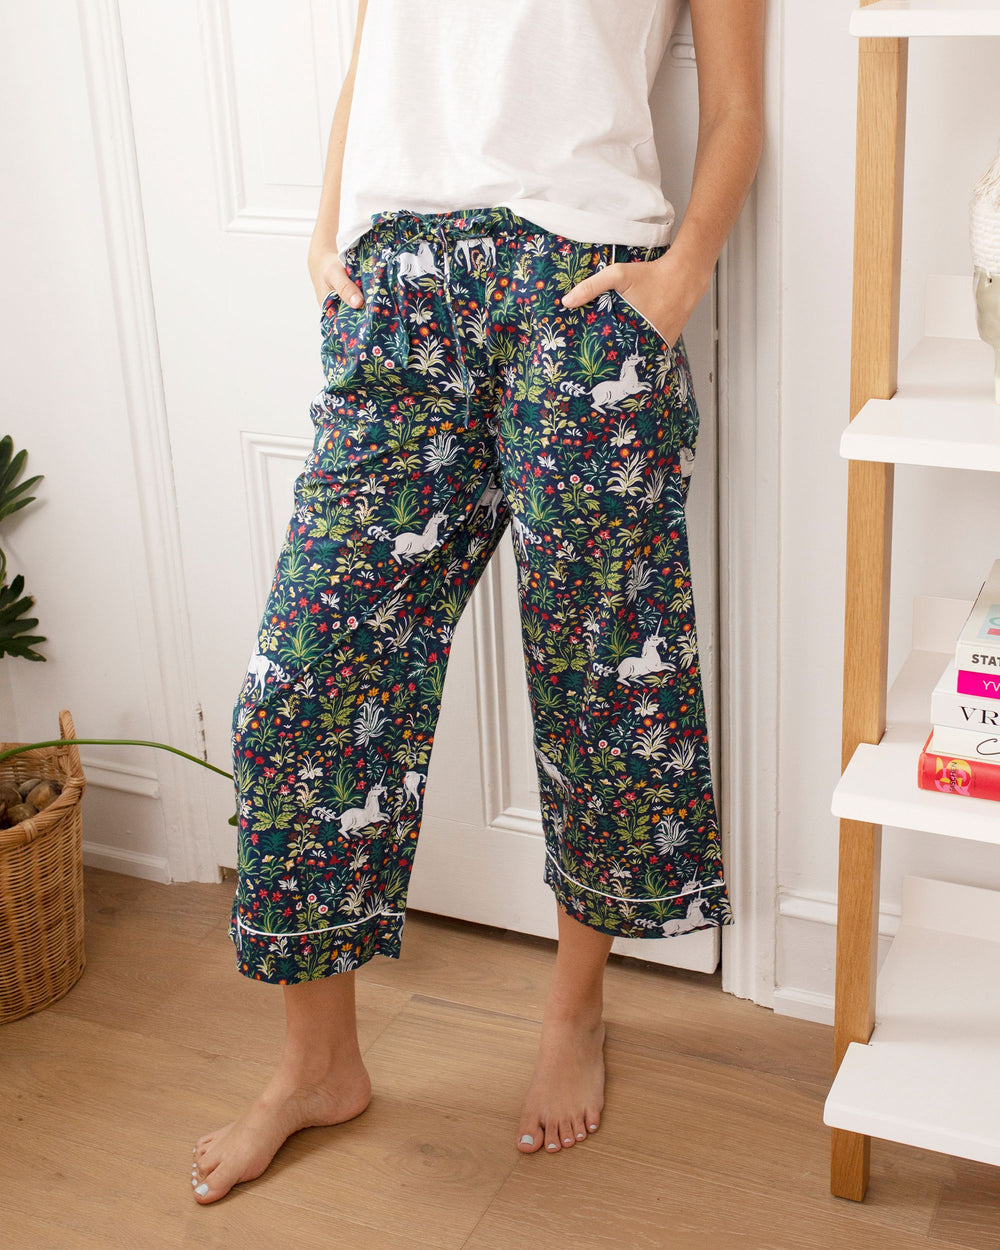 Abstract Unicorn Print Comfortable Soft Lounge Pajama Pants - SimplyCuteTees